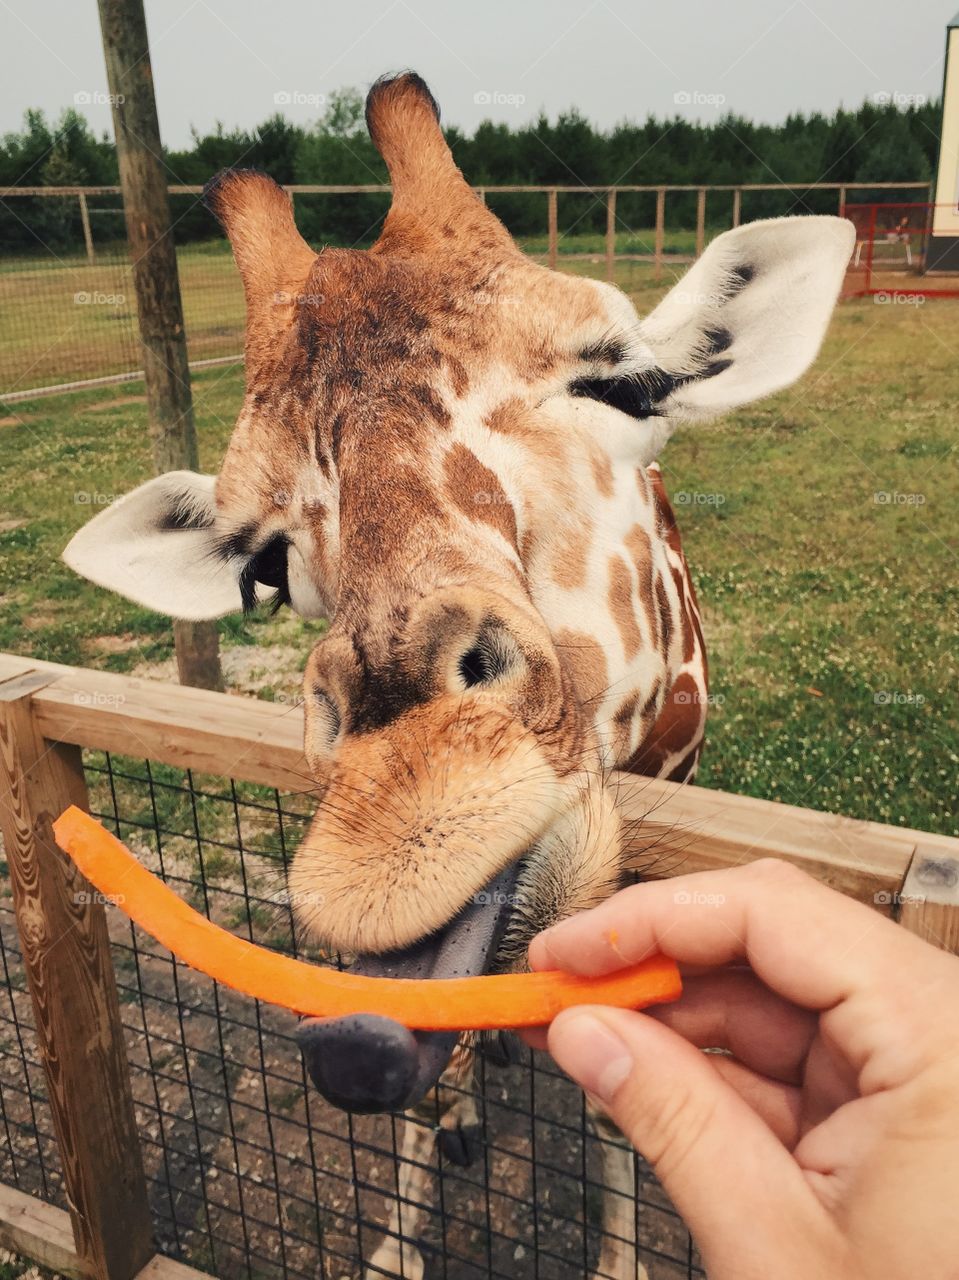 Feeding giraffe at zoo